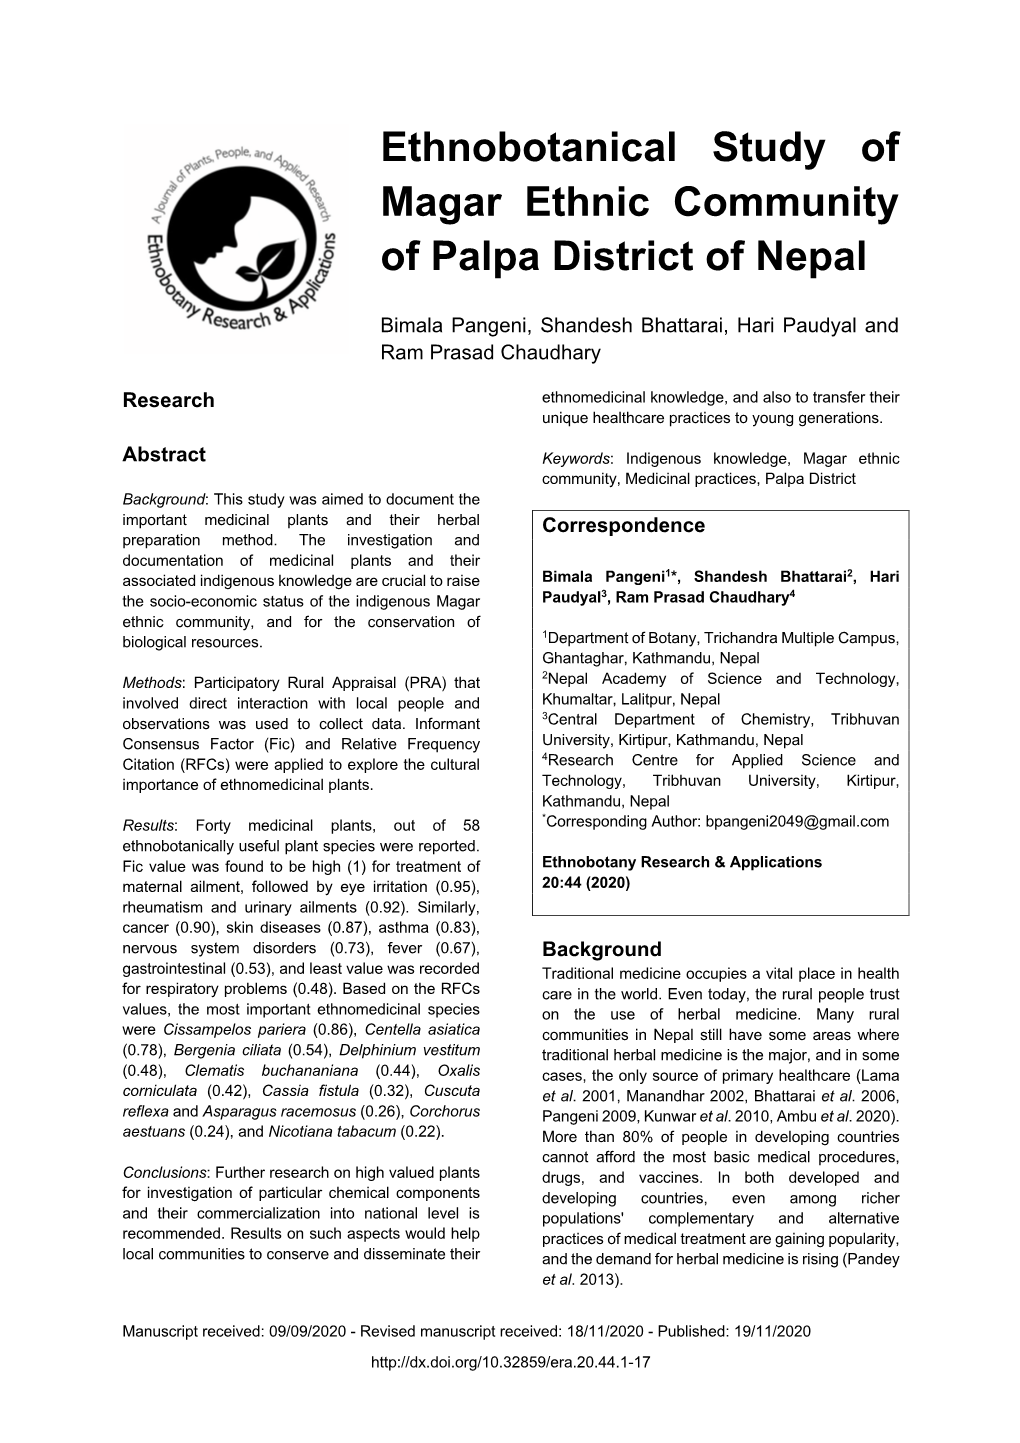 Ethnobotanical Study of Magar Ethnic Community of Palpa District of Nepal